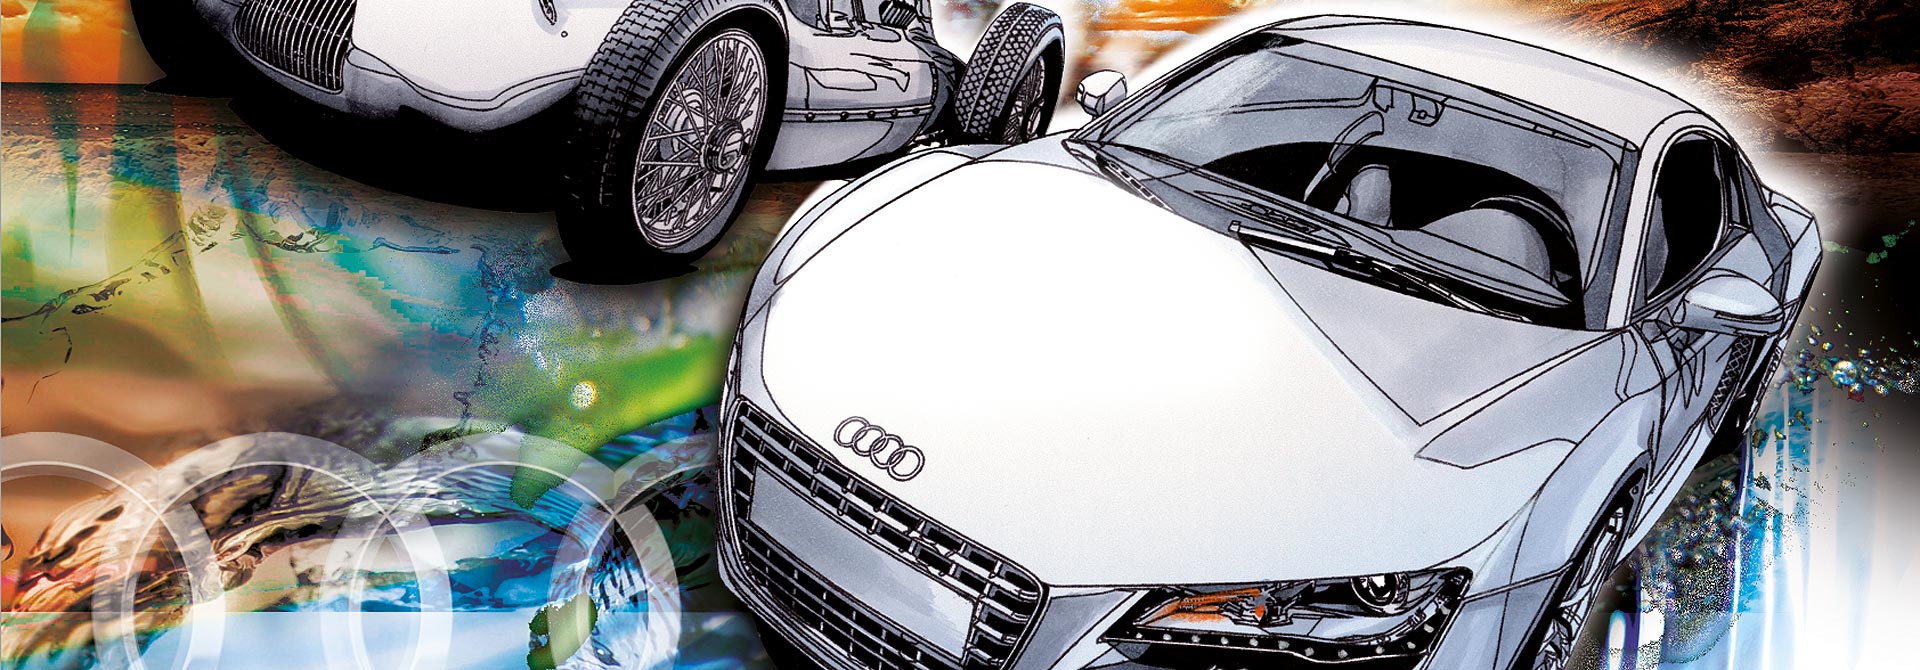 Bildausschnitt "Audi" für den Headerbereich